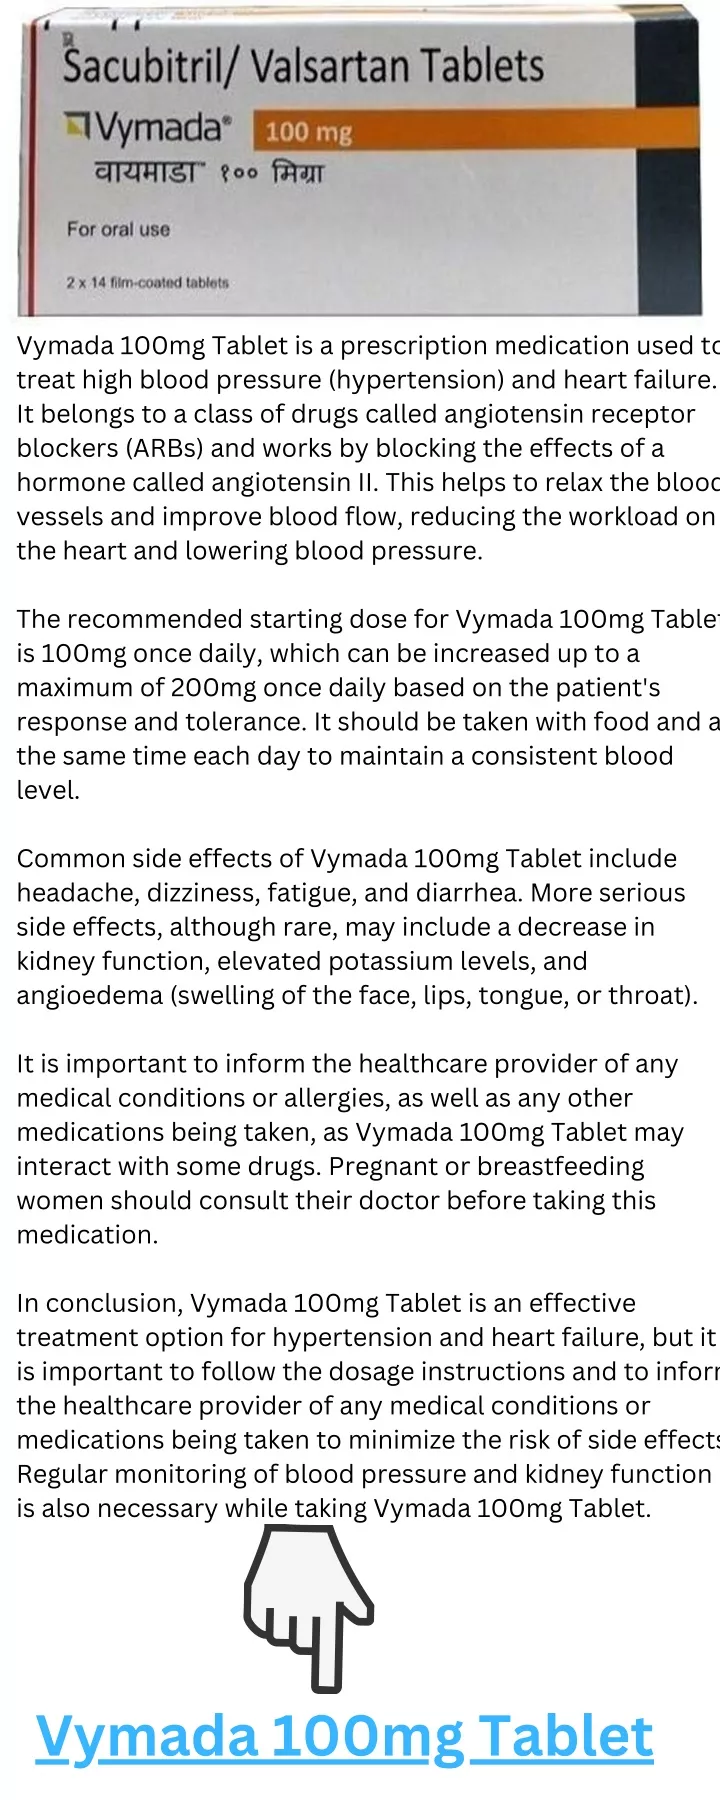 vymada 100mg tablet is a prescription medication